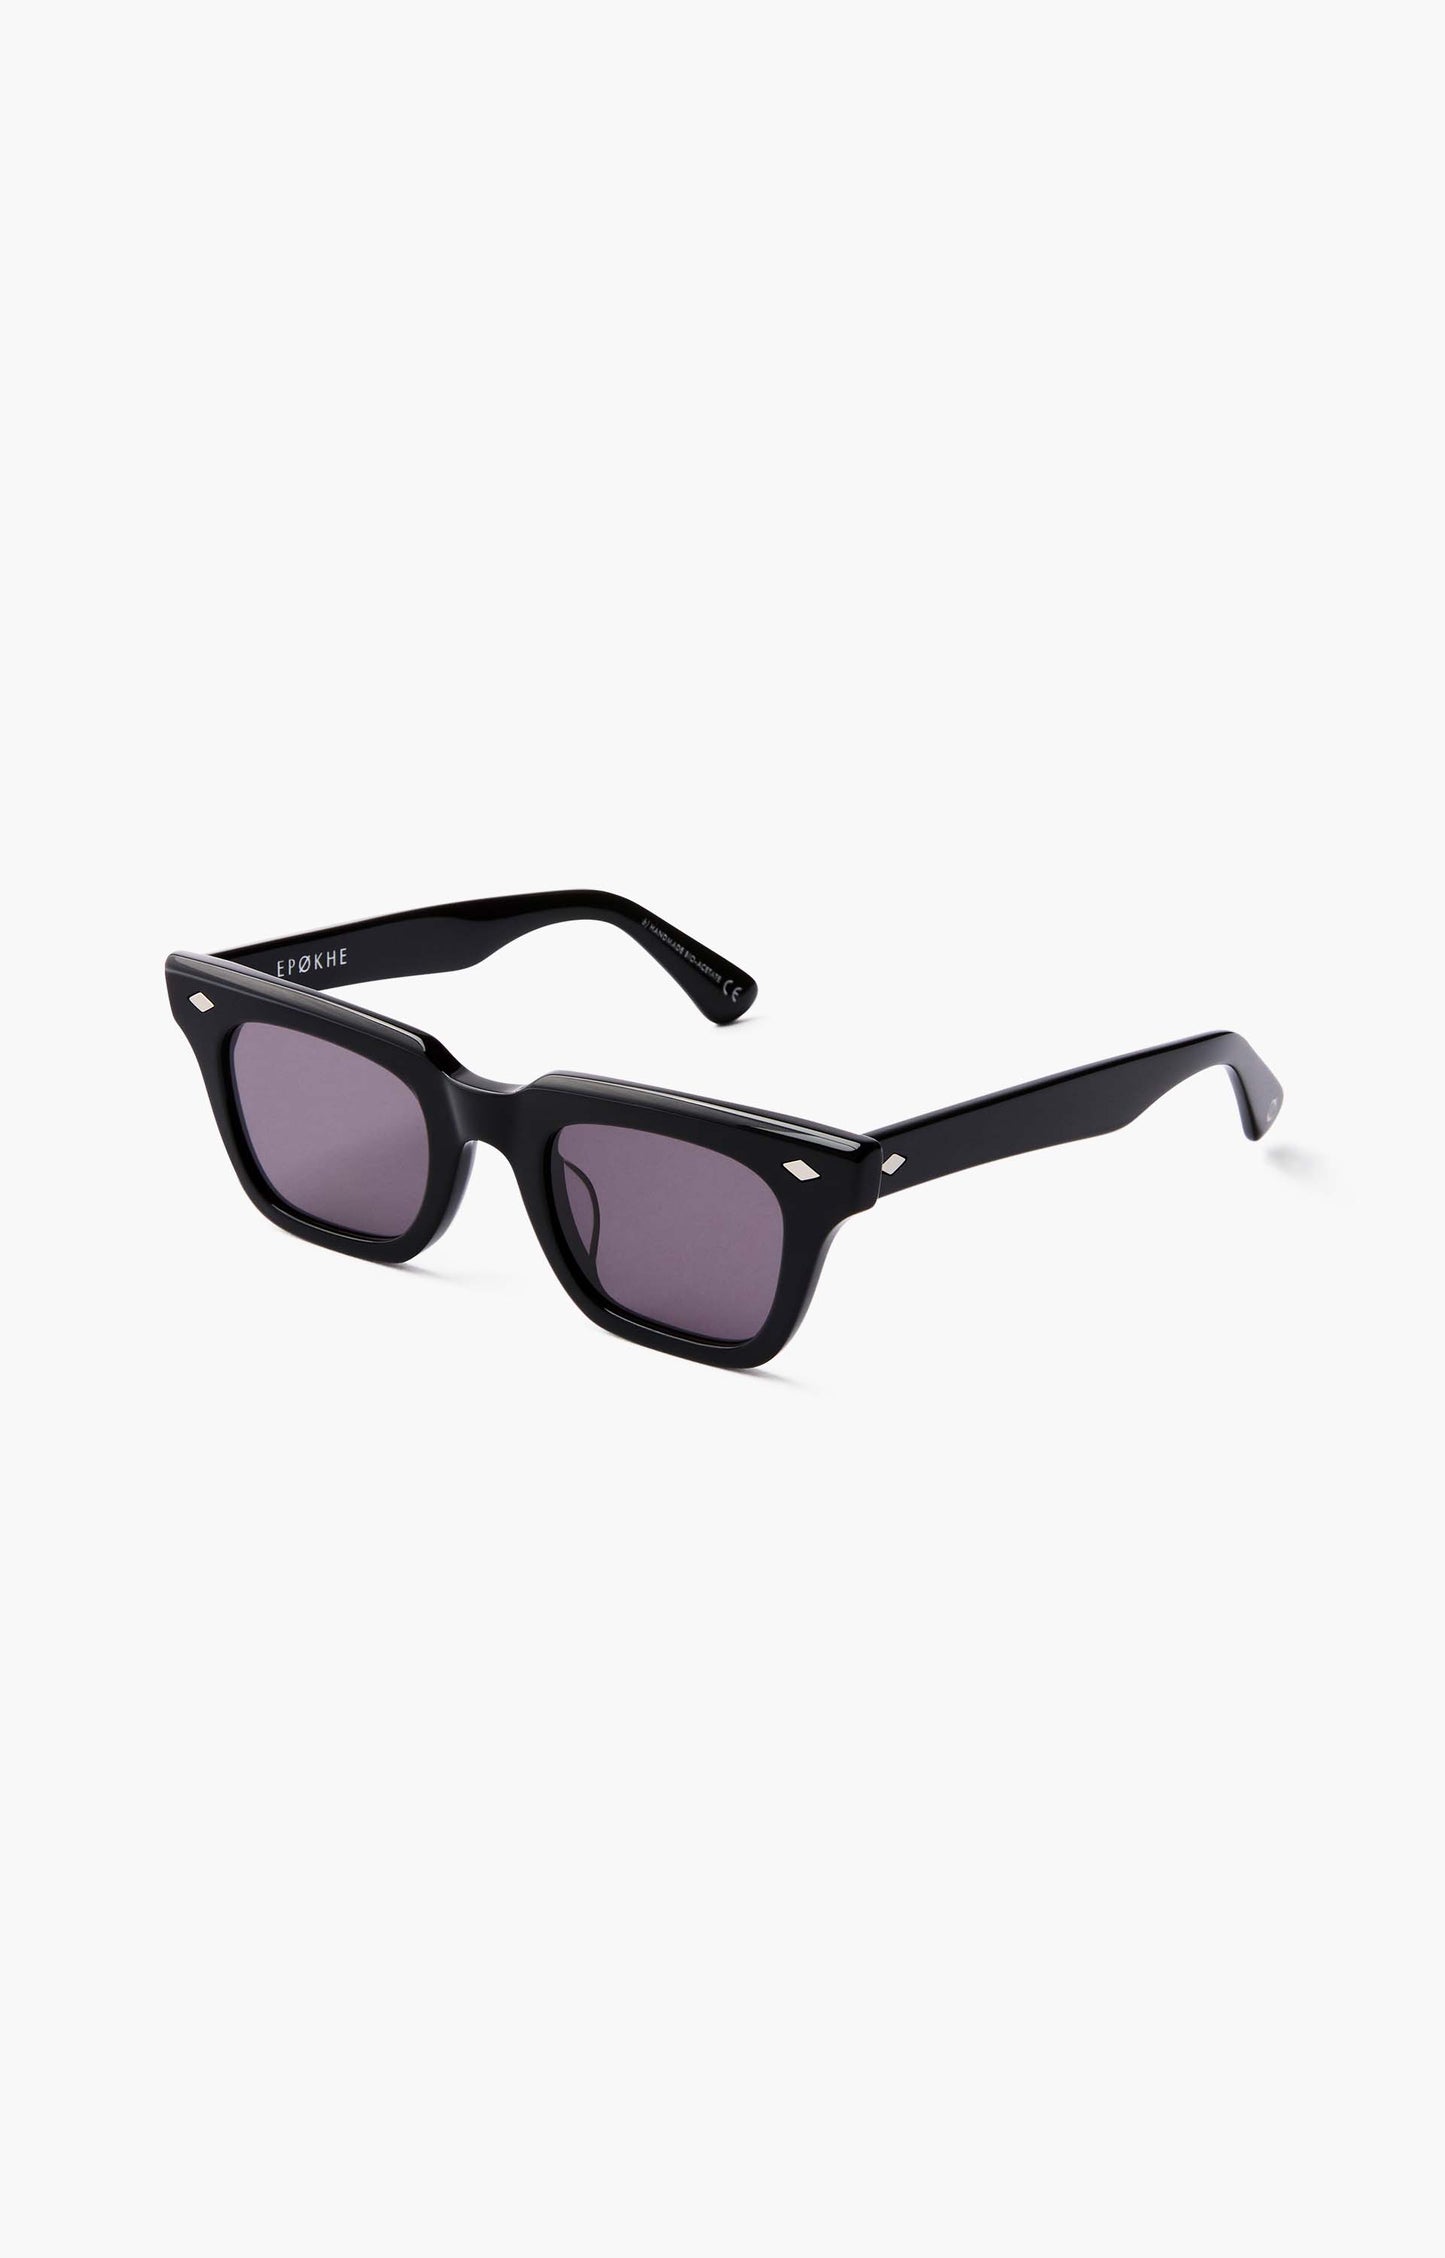 Epokhe Stereo Sunglasses, Black Polished/Black